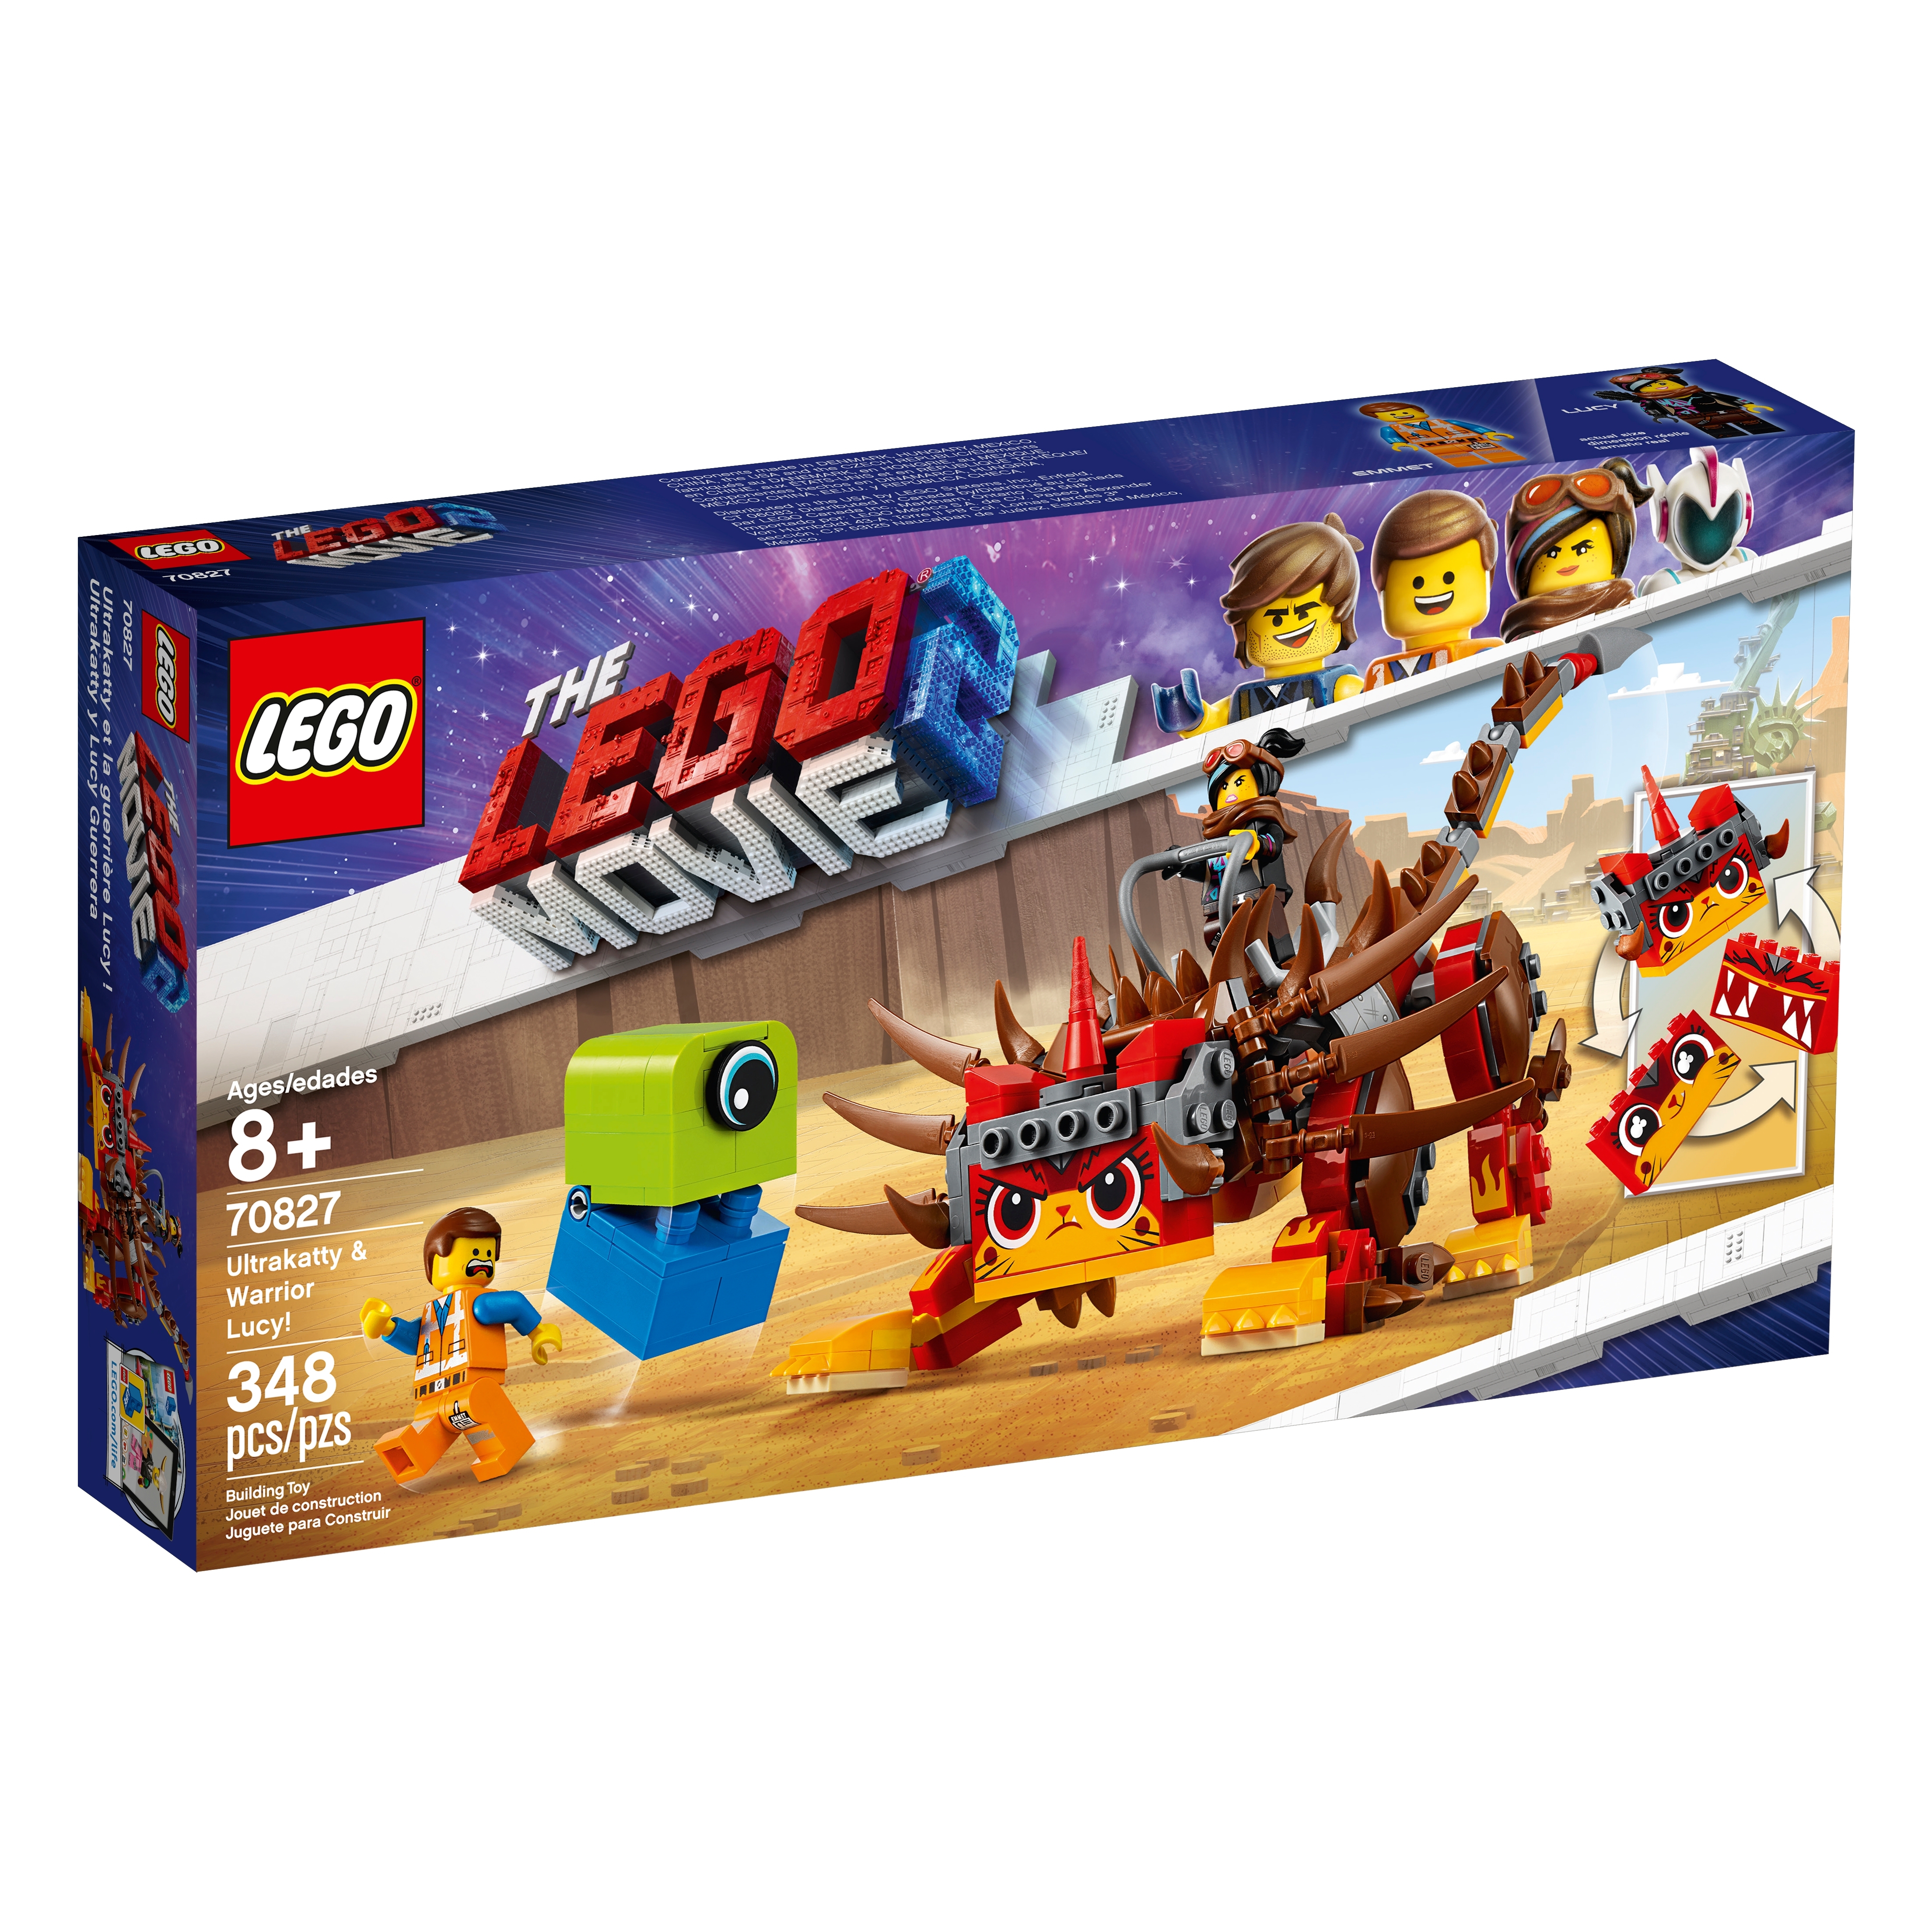 Ultrakatty & Warrior Lucy! 70827 | THE LEGO® MOVIE 2™ | Buy online 